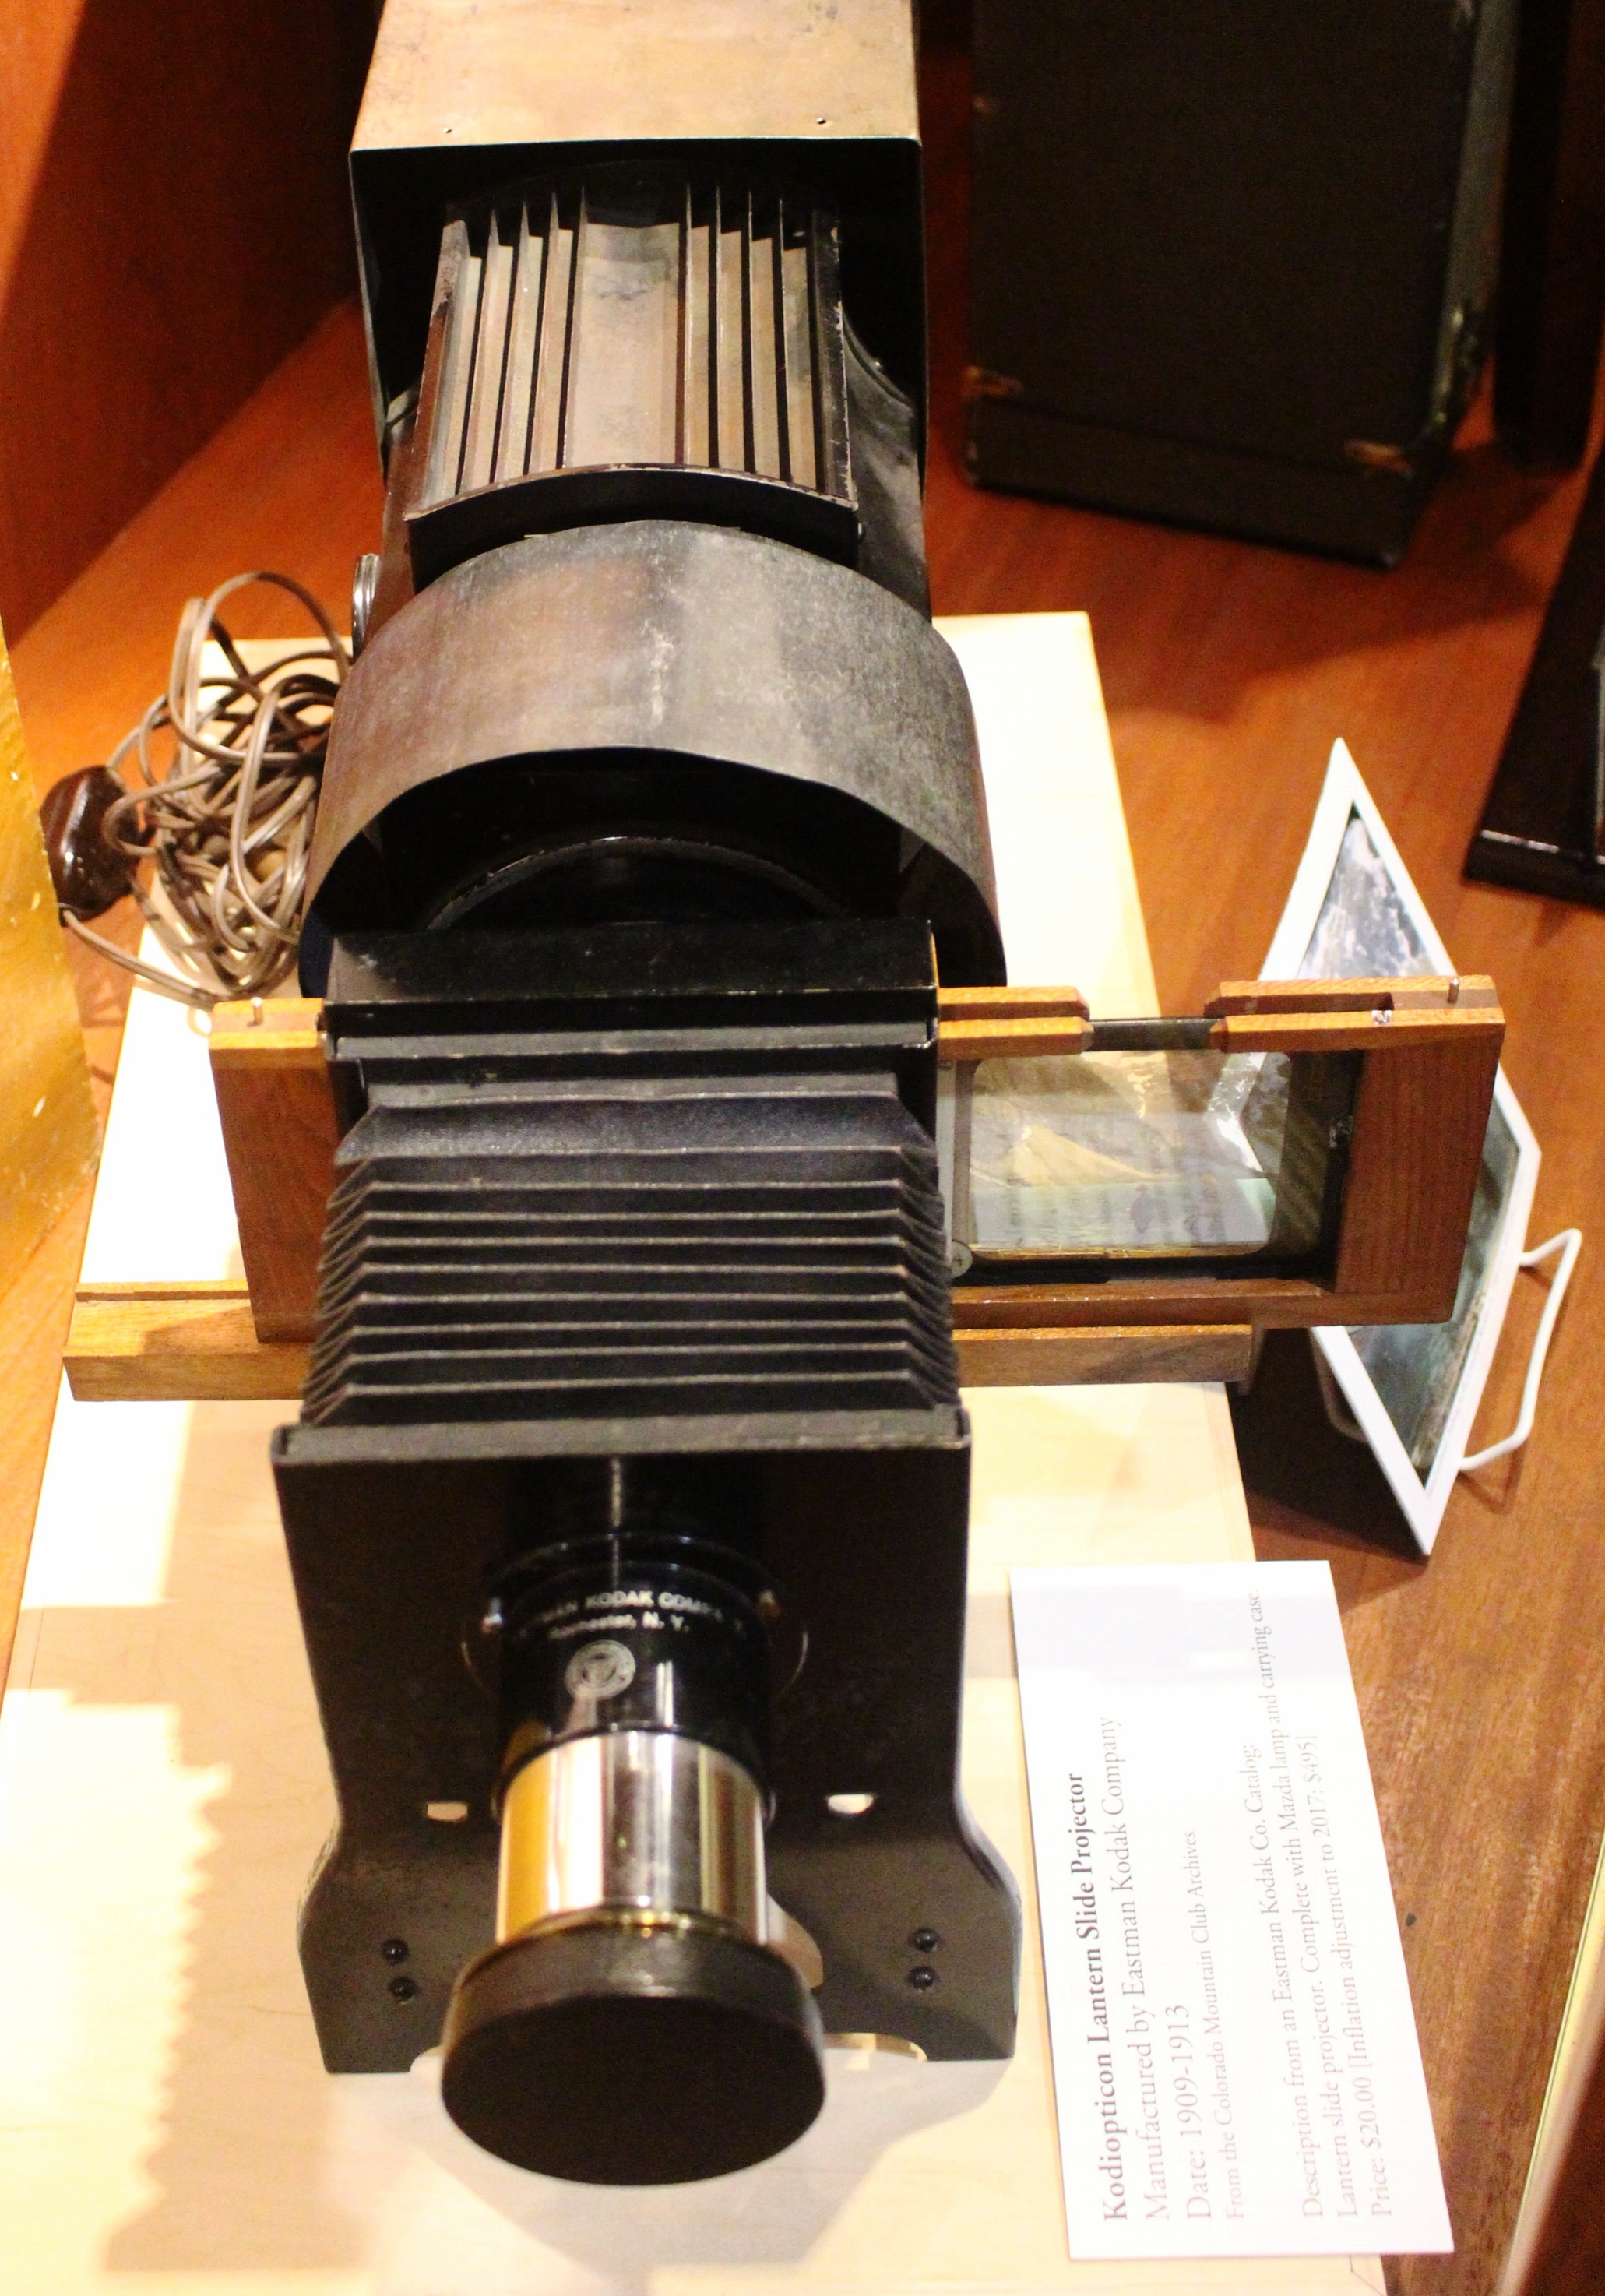 Kodiopticon Lantern Slide Projector